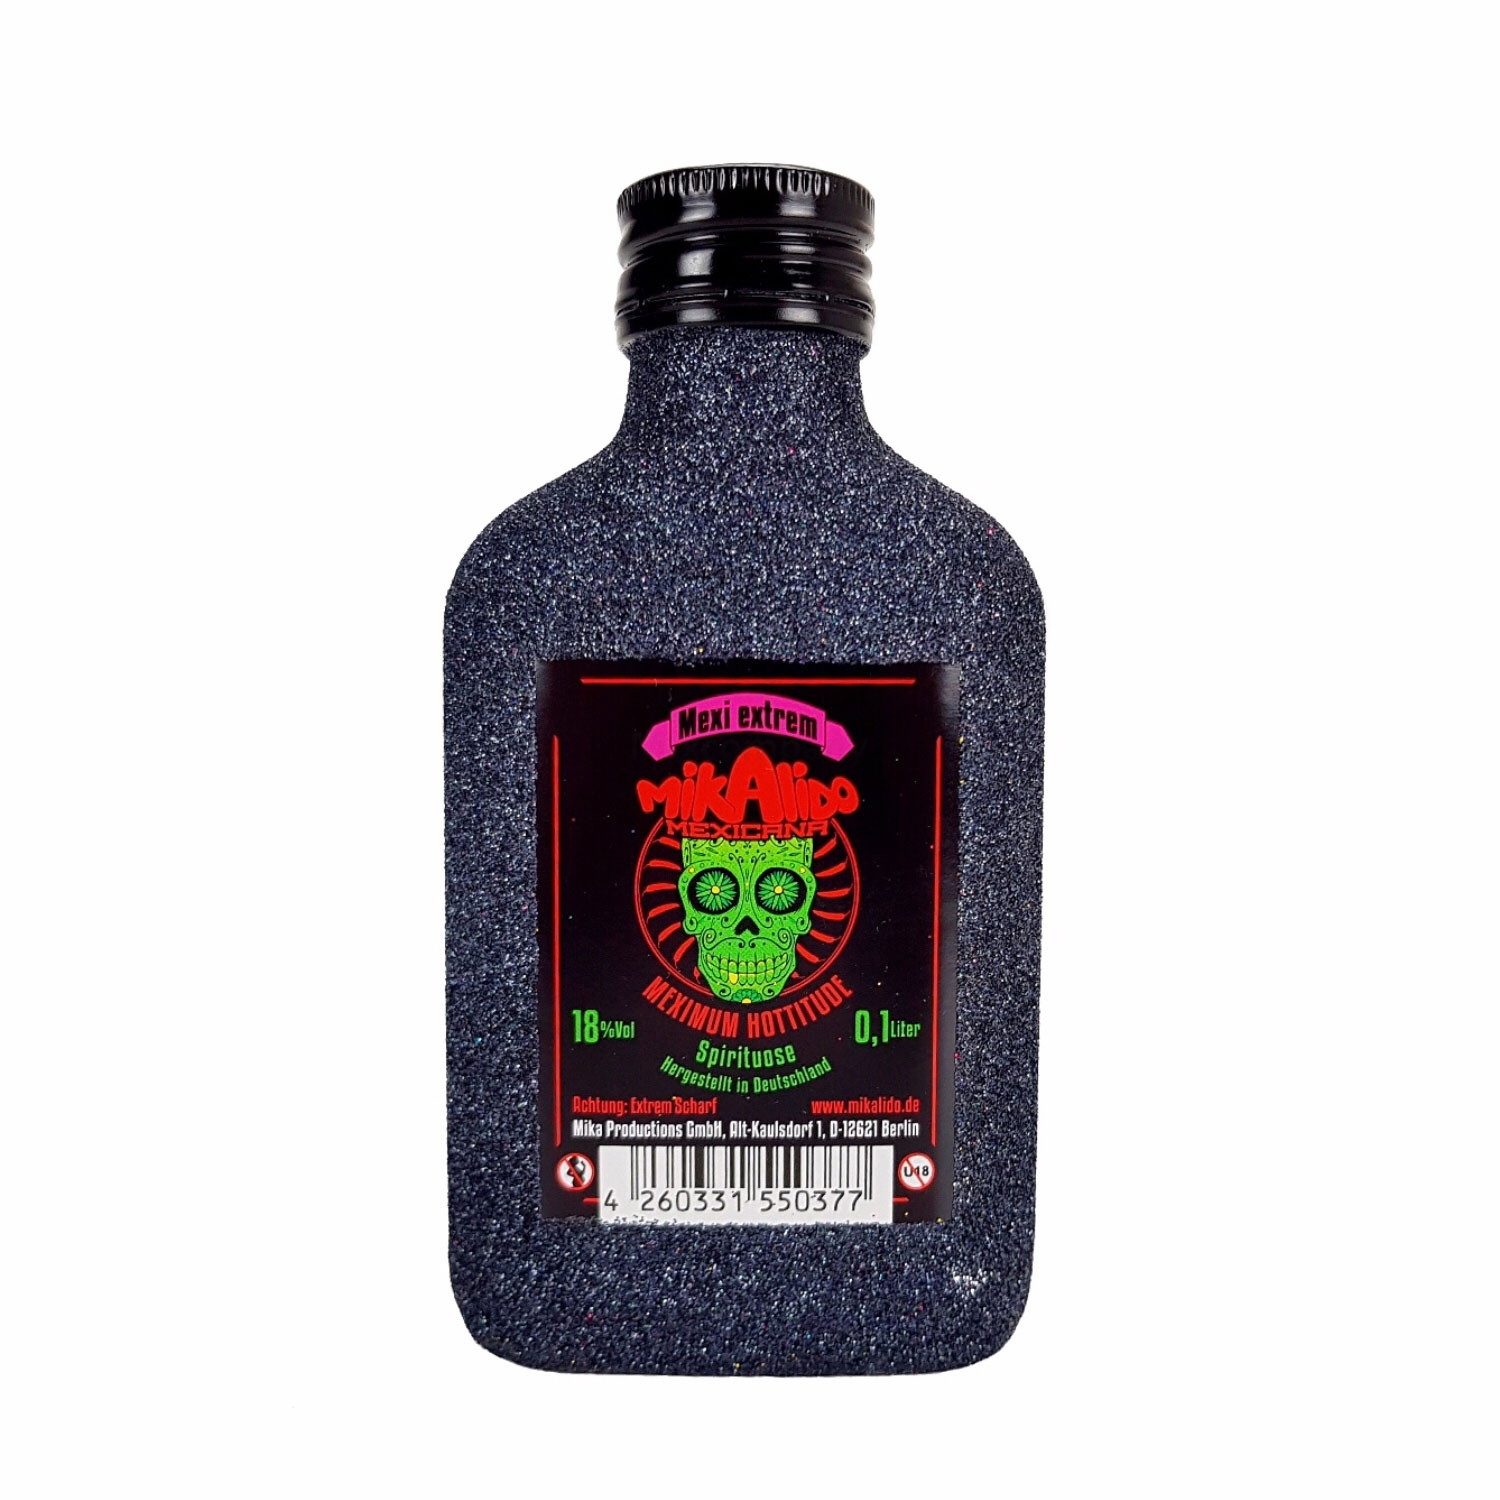 Mikalido Mexicana Mexi extrem scharf Spirituose 0,1l (18% Vol) Blin Bling Glitzerflasche in schwarz -[Enthält Sulfite]